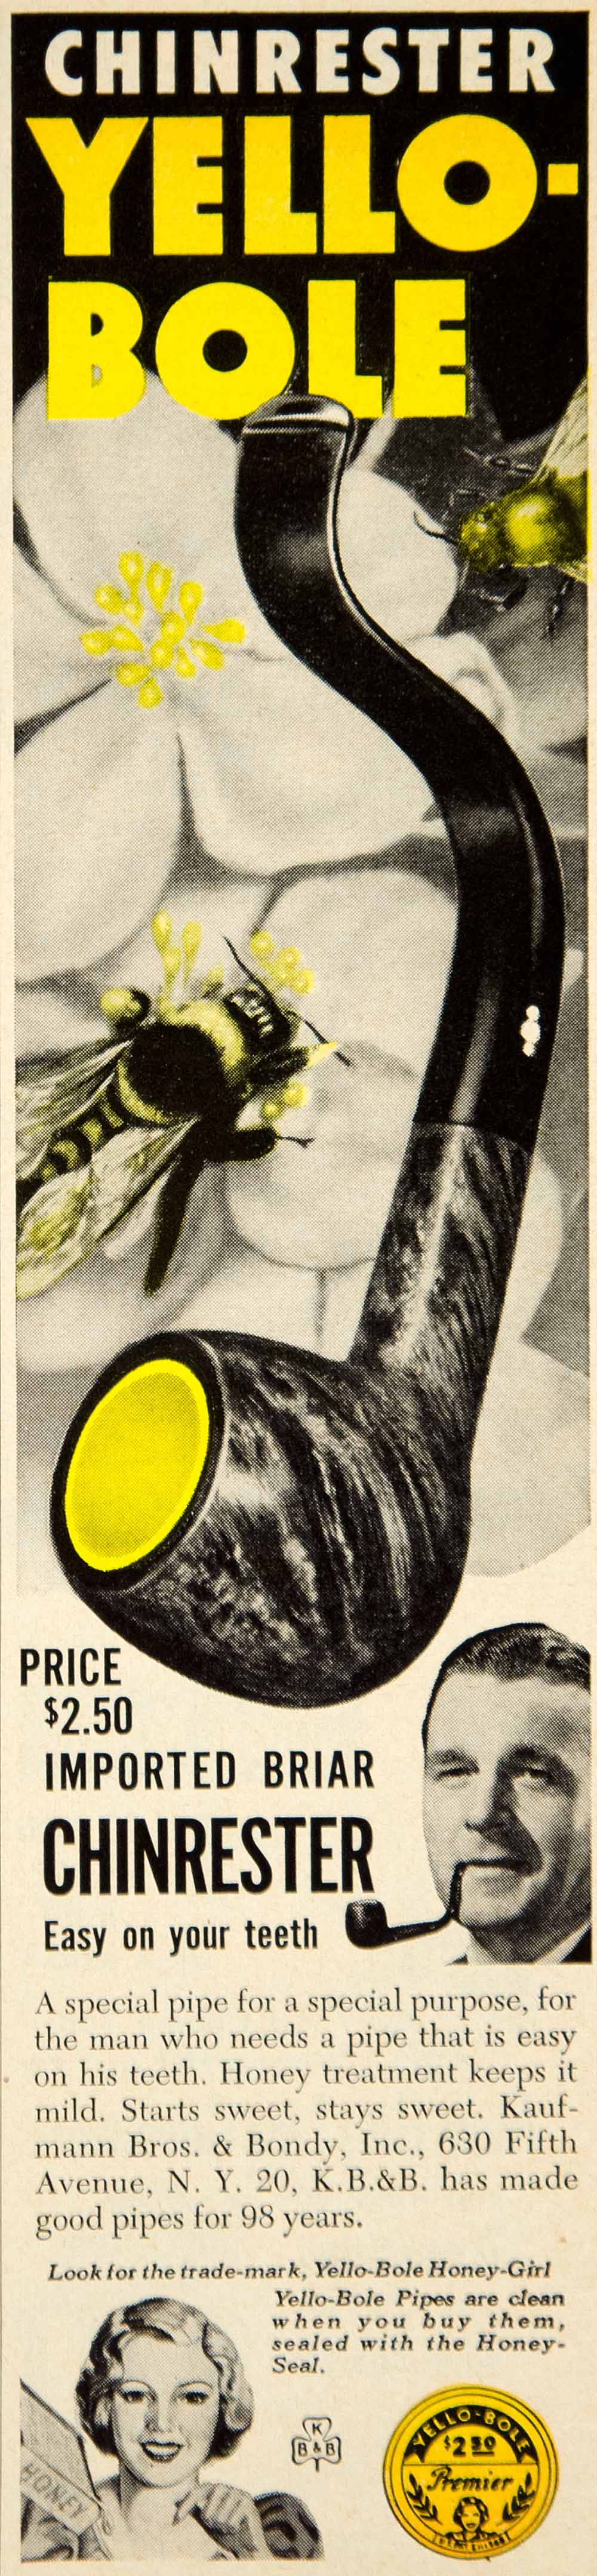 1949 Ad Yello-Bole Briar Chinrester Pipe Smoking Tobacco Kauffmann Bros YFS2